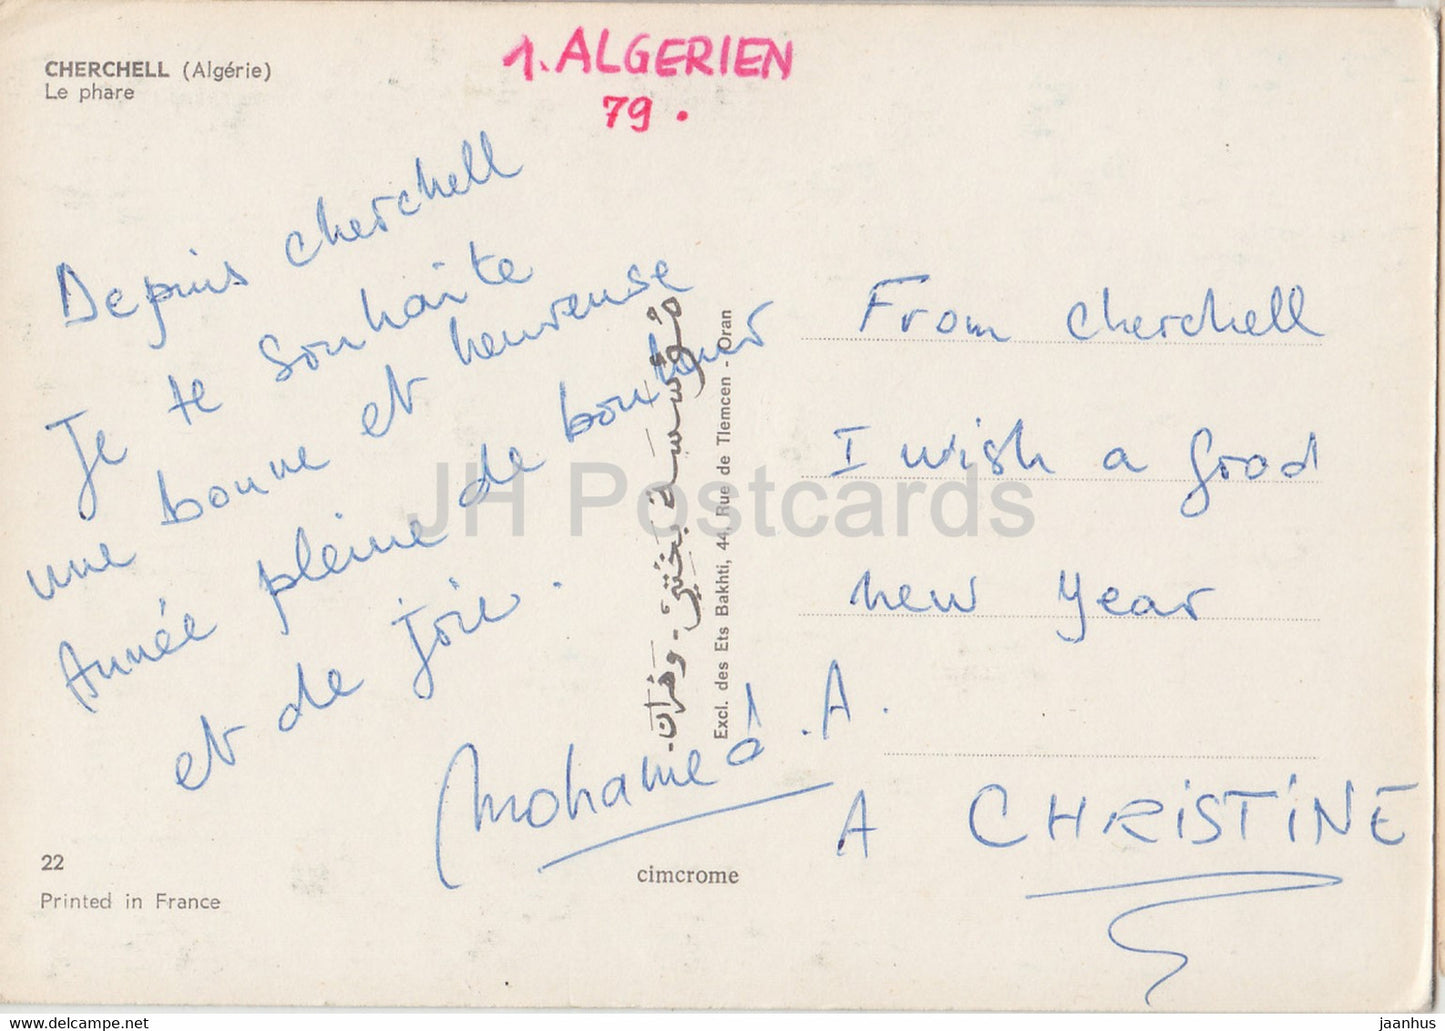 Cherchell - Le Phare - phare - Beau Fixe - 1979 - Algérie - occasion